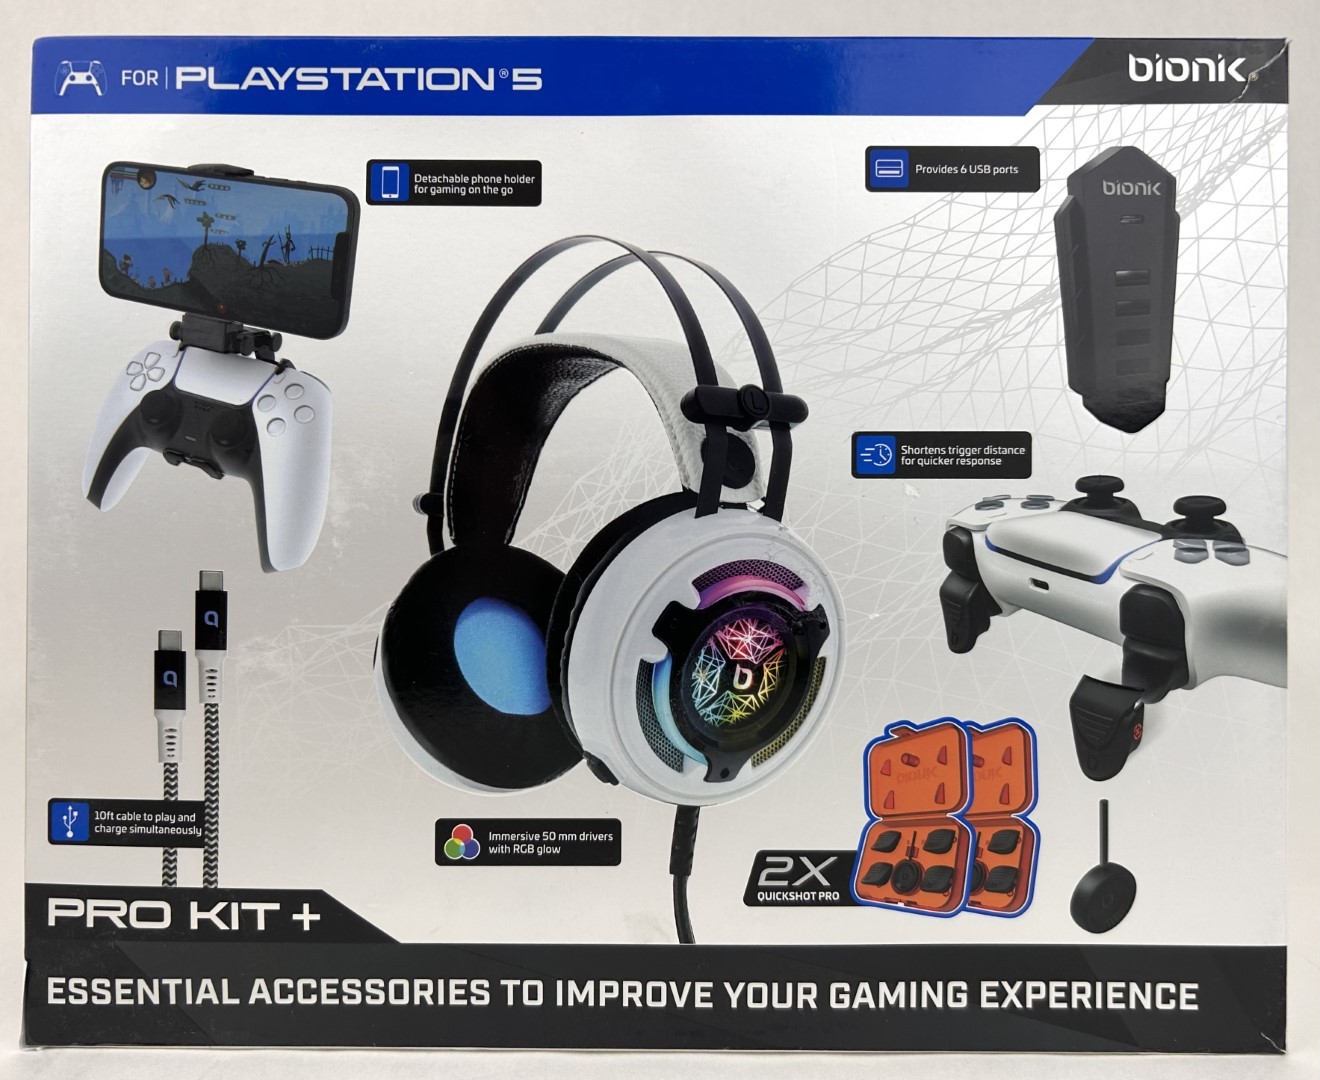 Bionik Pro Kit+ For PS5 PlayStation 5 w/ 2x Quickshot Pro - OB